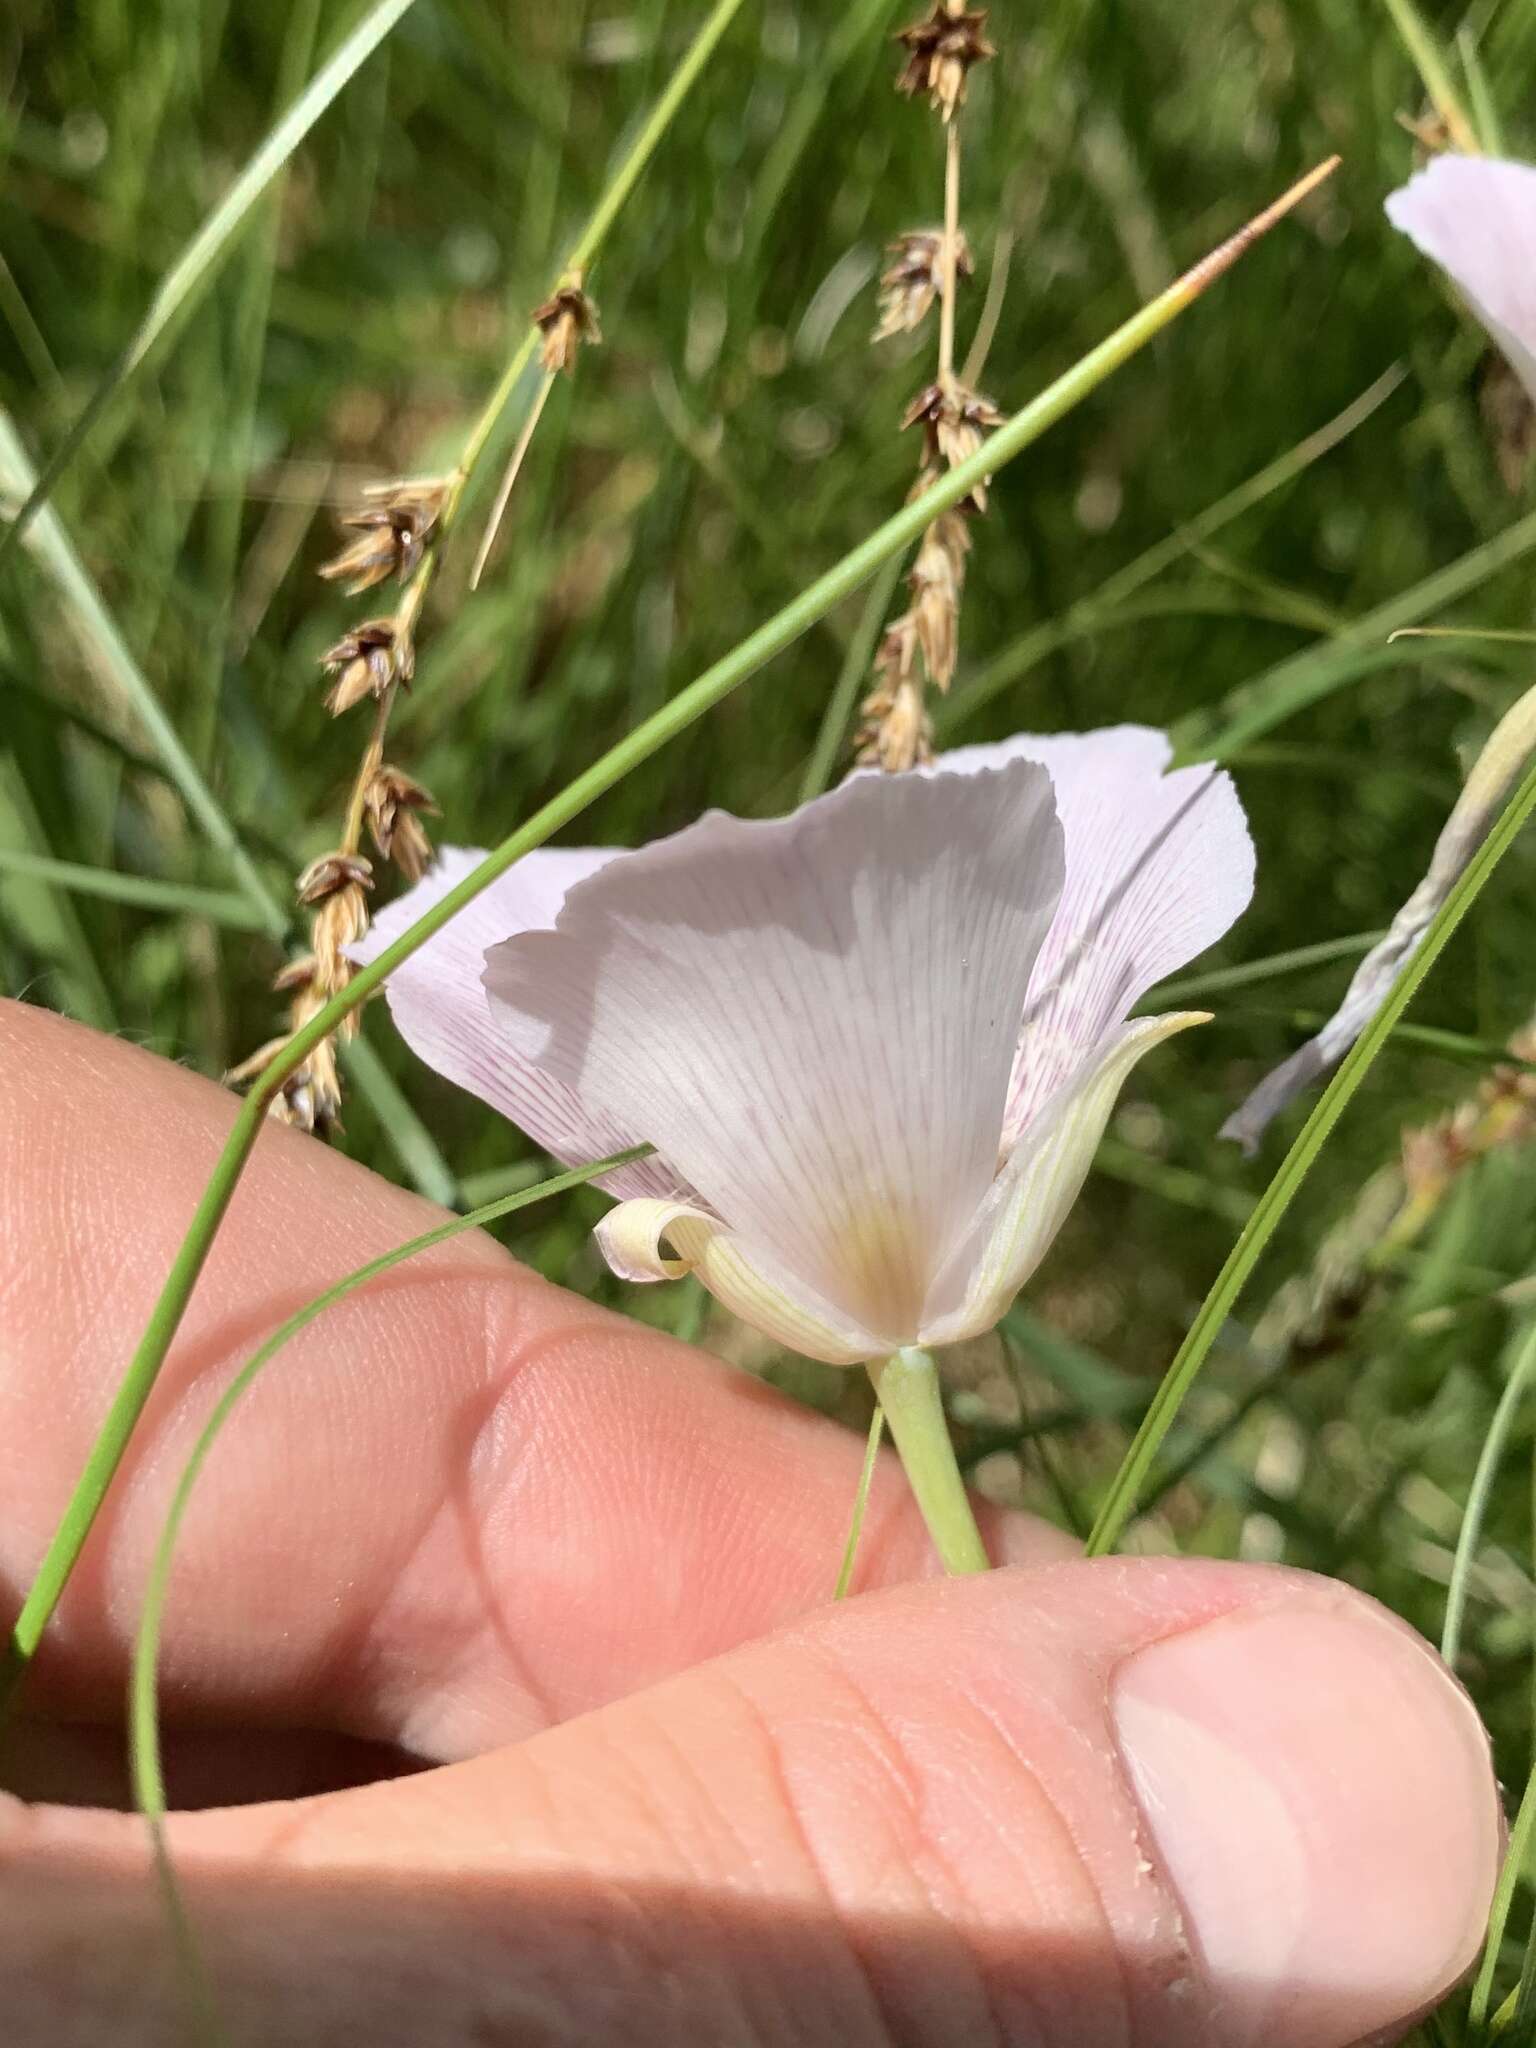 Image of alkali mariposa lily